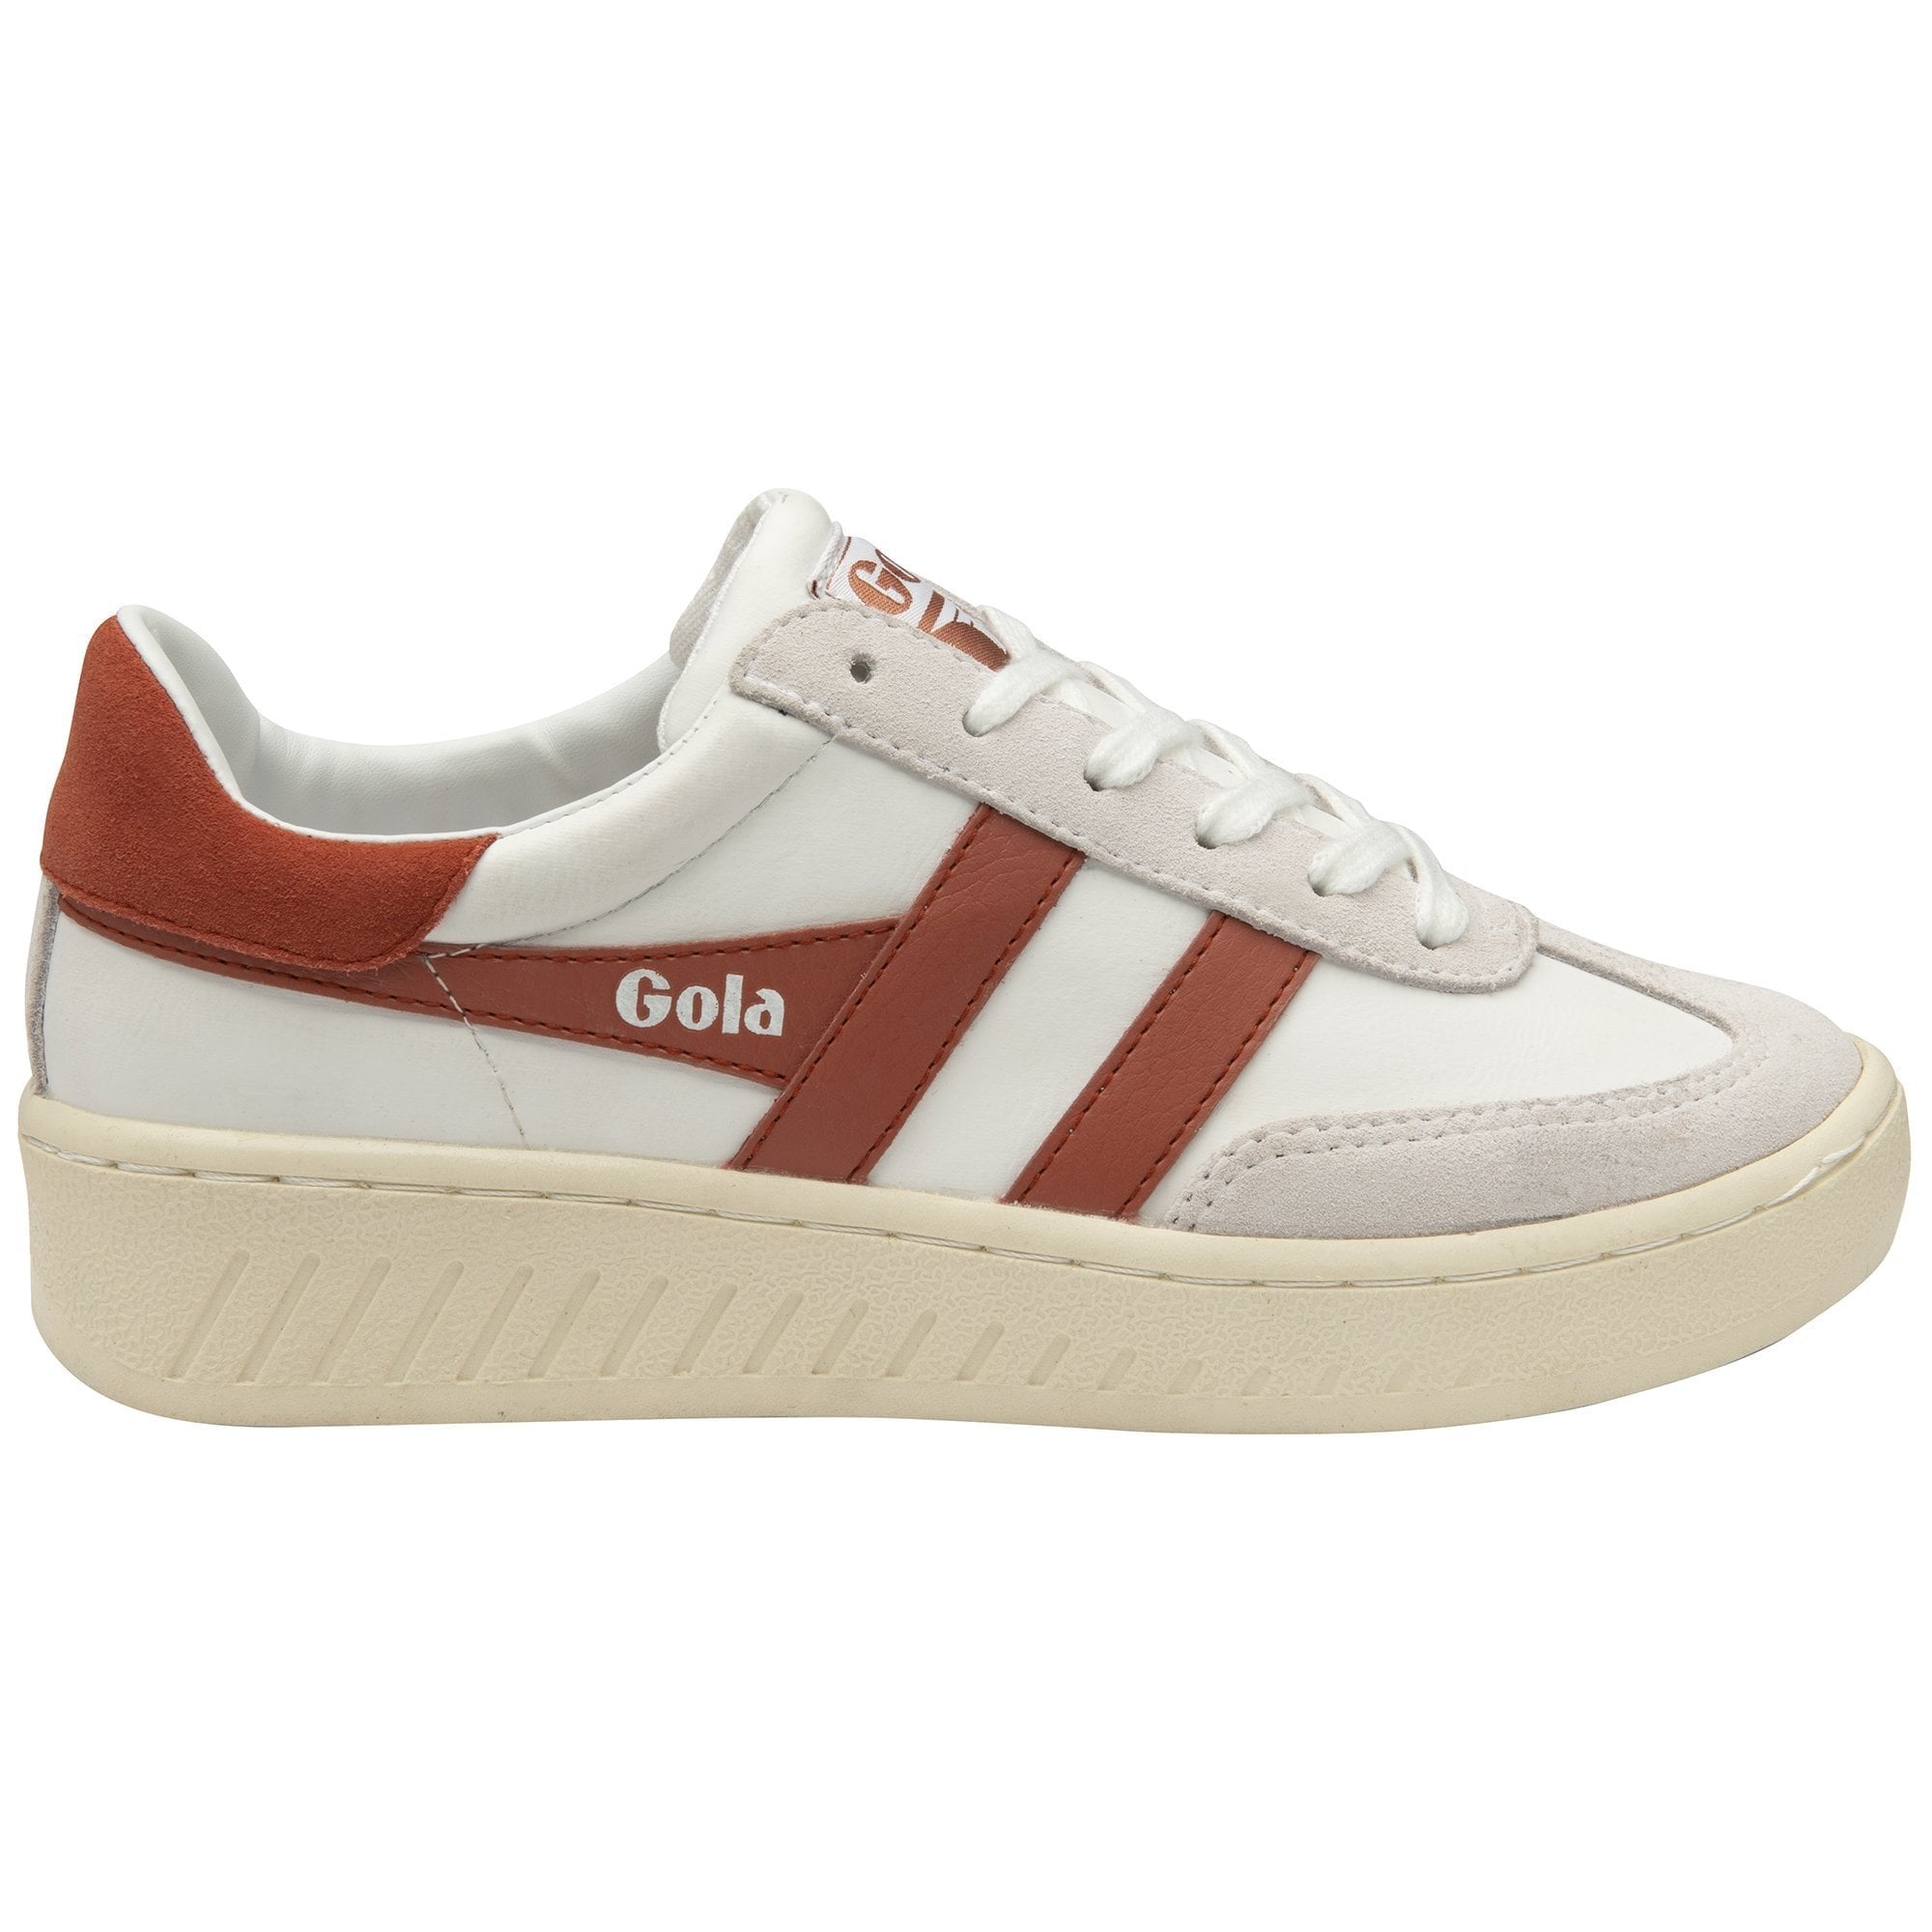 Gola Dropshot White/Orange Spice Sneaker